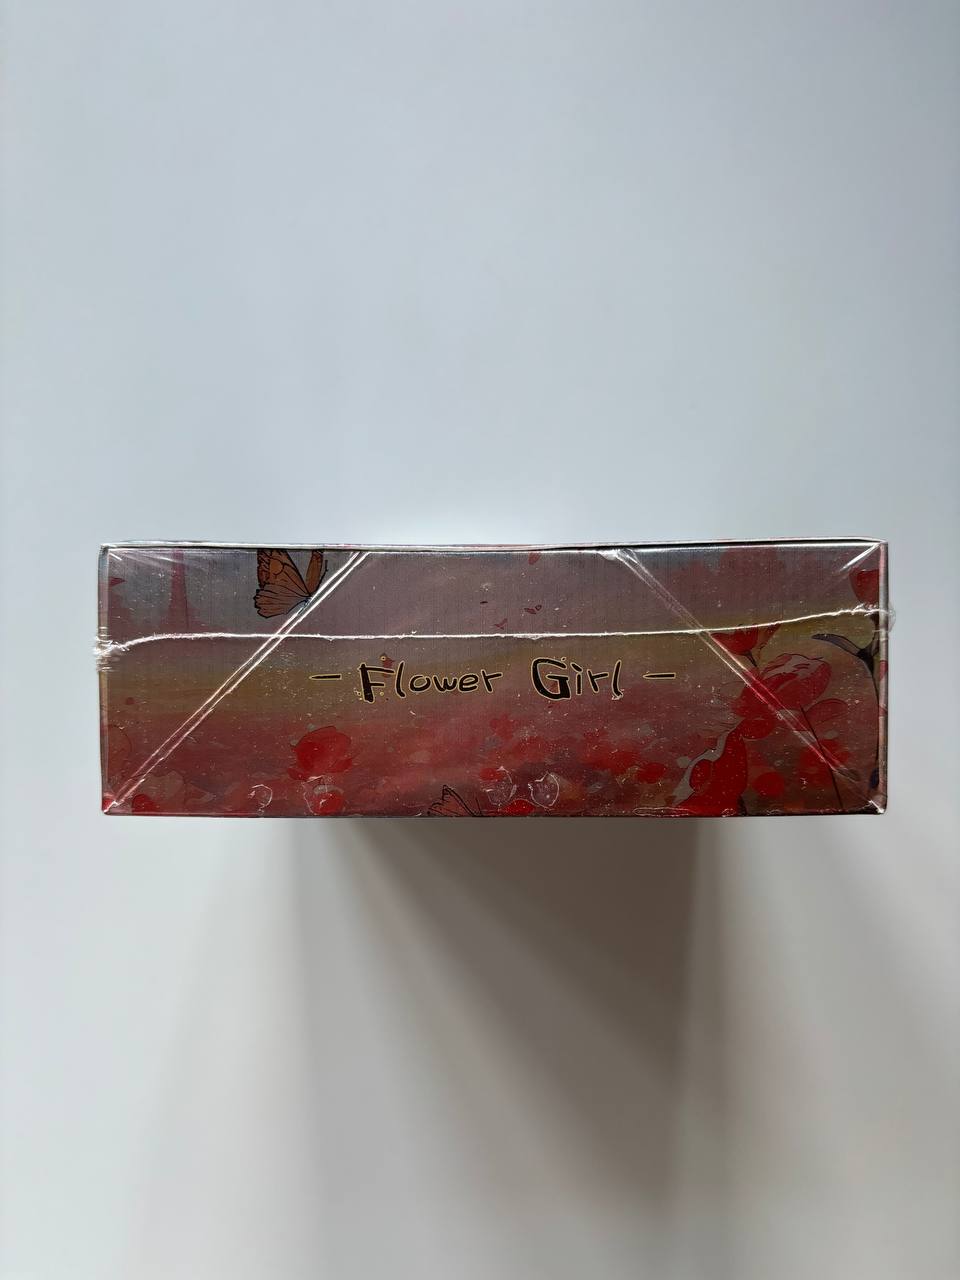 Goddess Story Flowers Girl Display Card Box Sealed